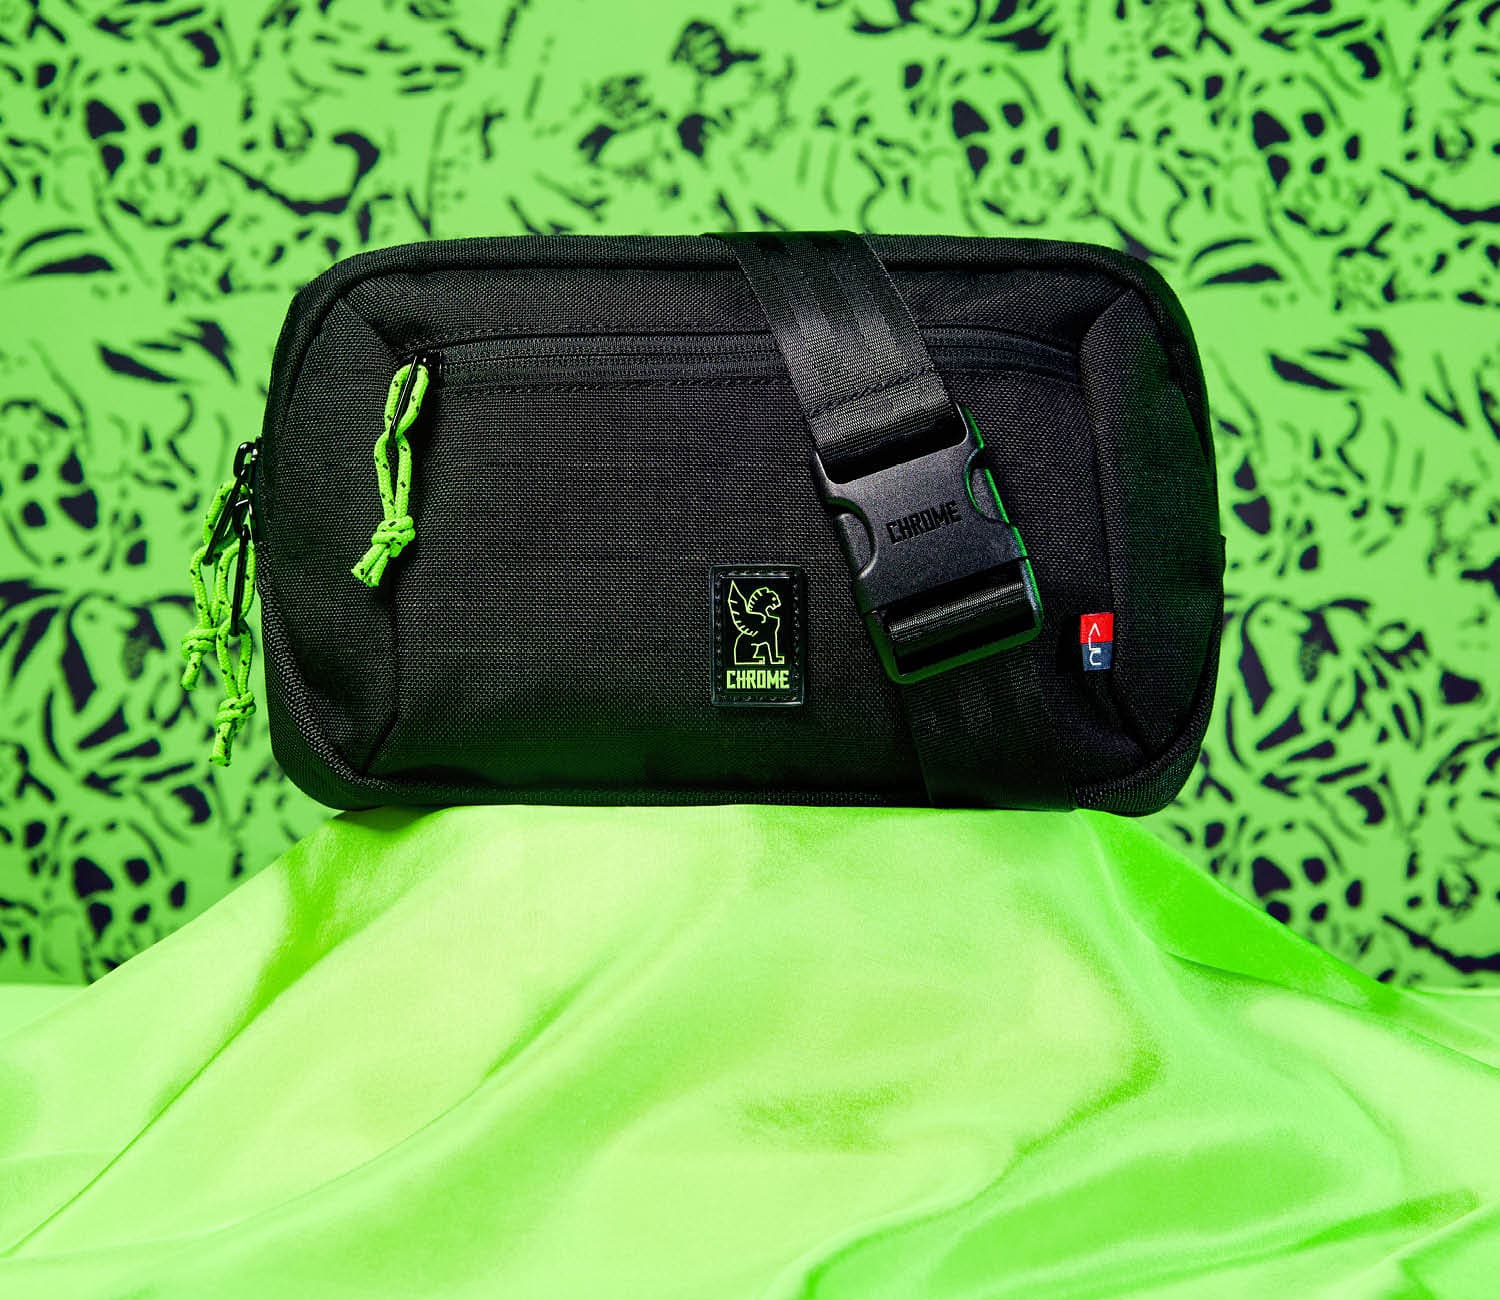 Help me pick a green every day bag! : r/handbags